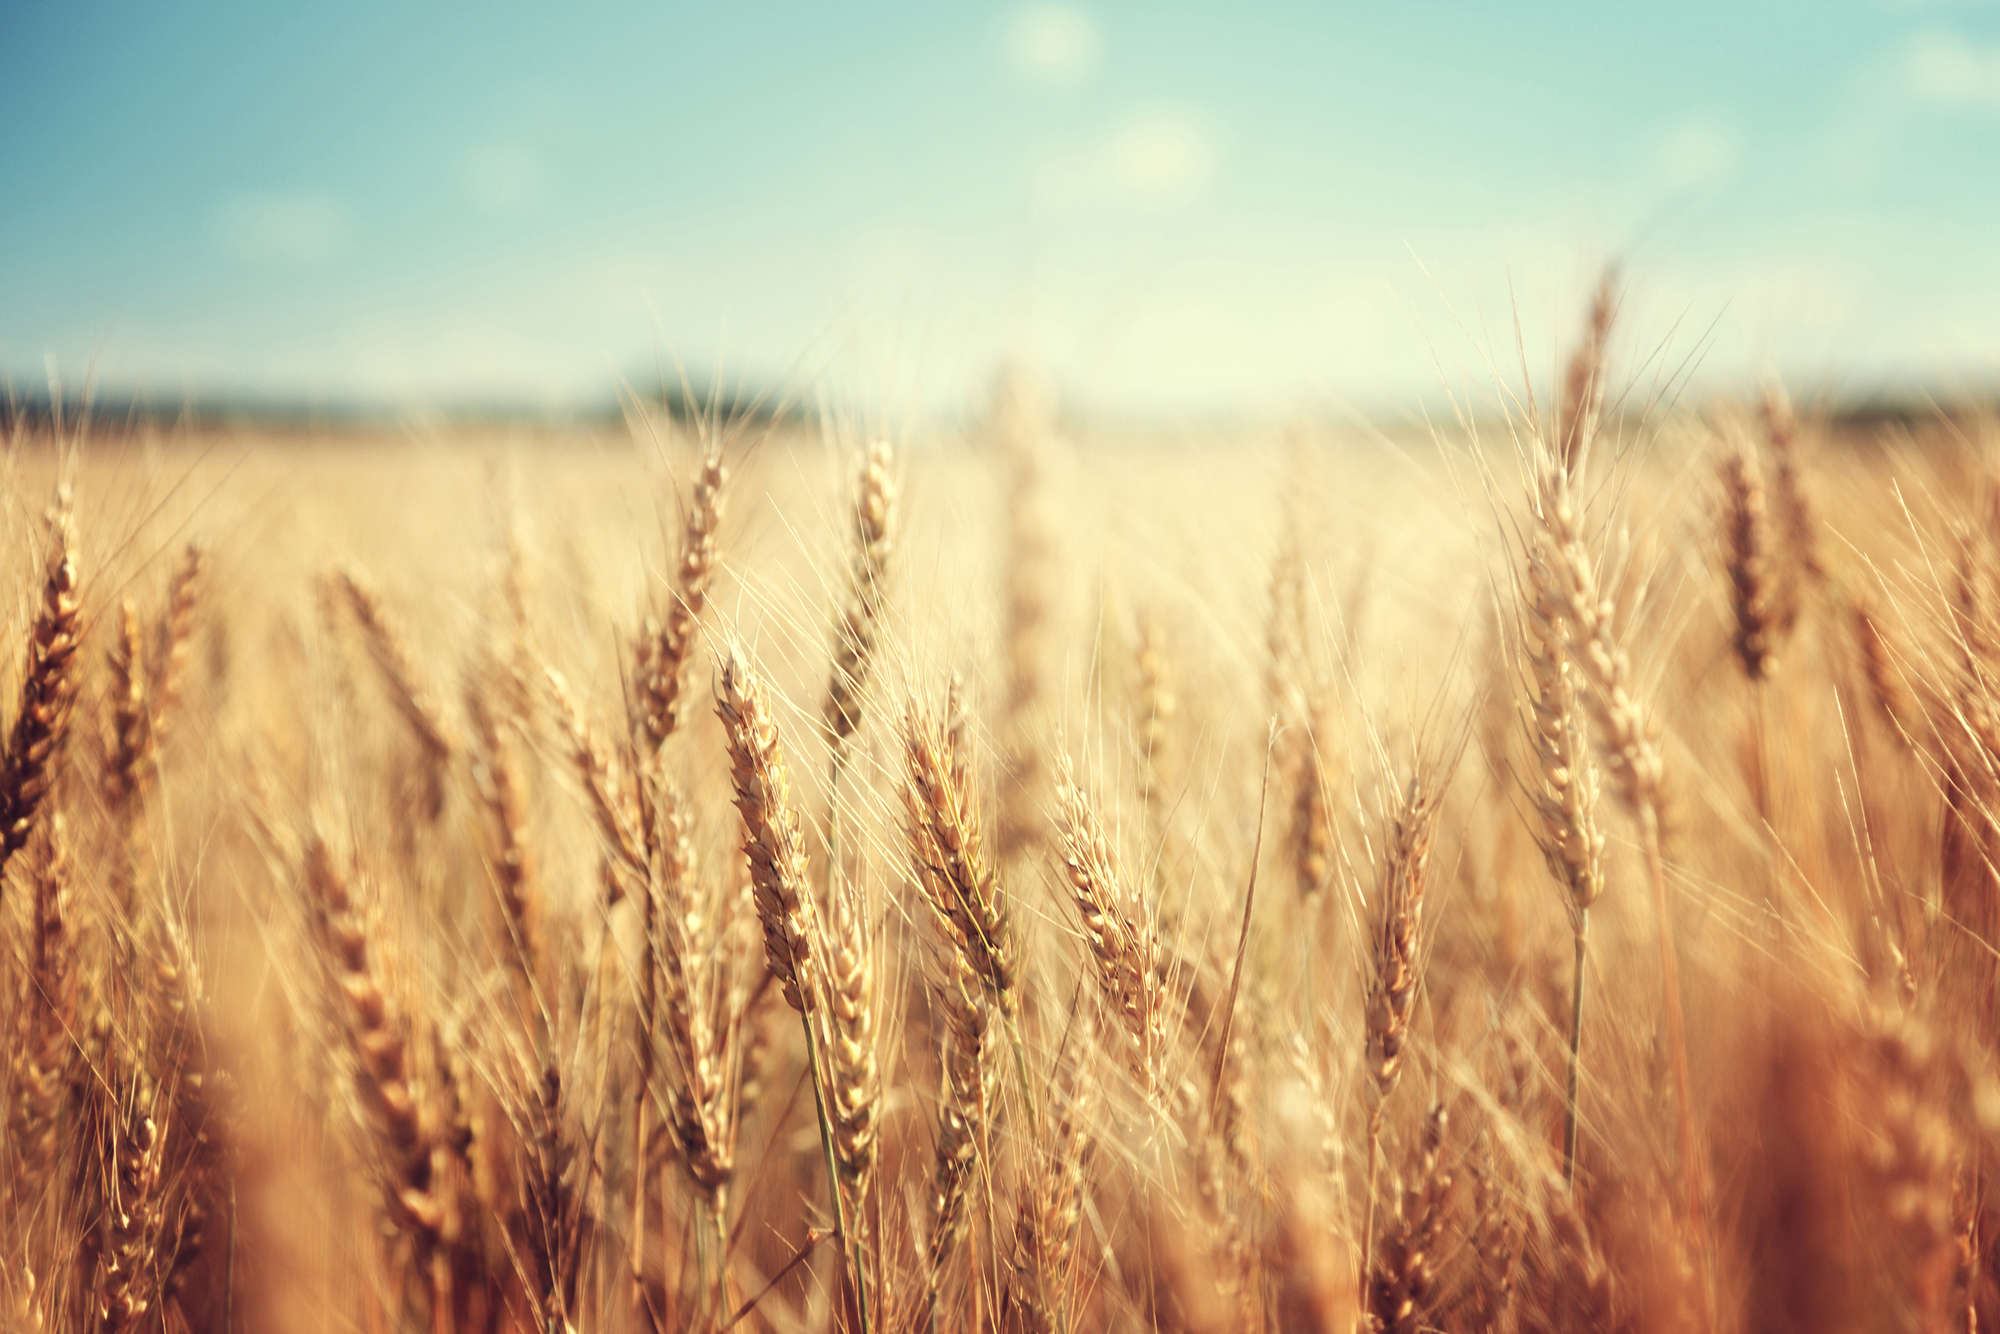             Plants mural wheat field on matt smooth fleece
        